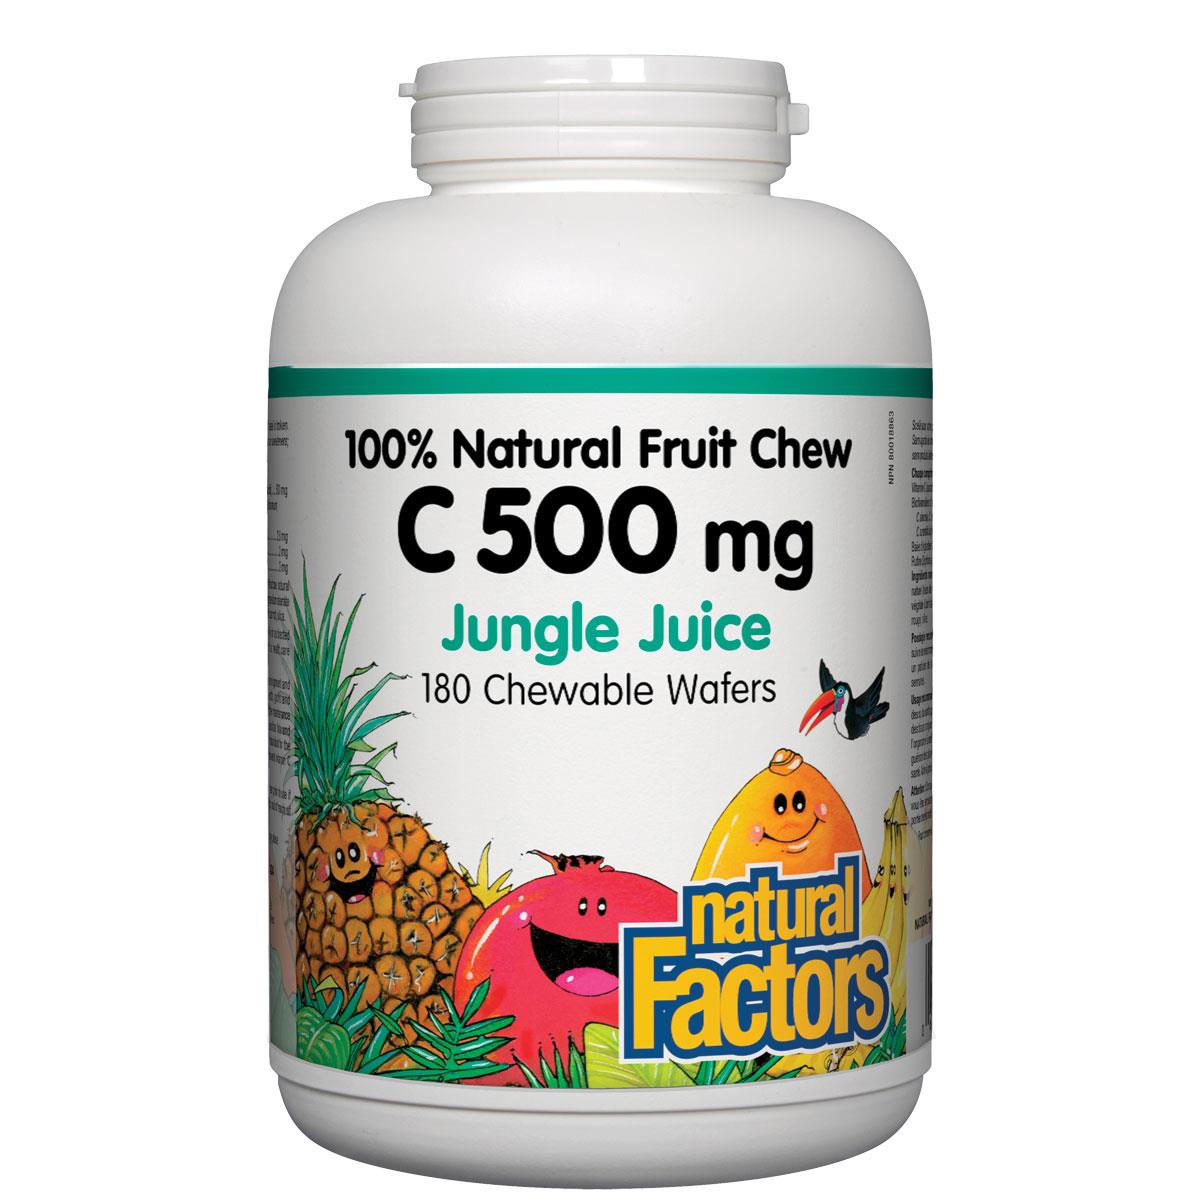 Natural Factors Vitamin C 100% Natural Fruit Chew (Jungle Juice Flavour), 500mg, 90 Chewables